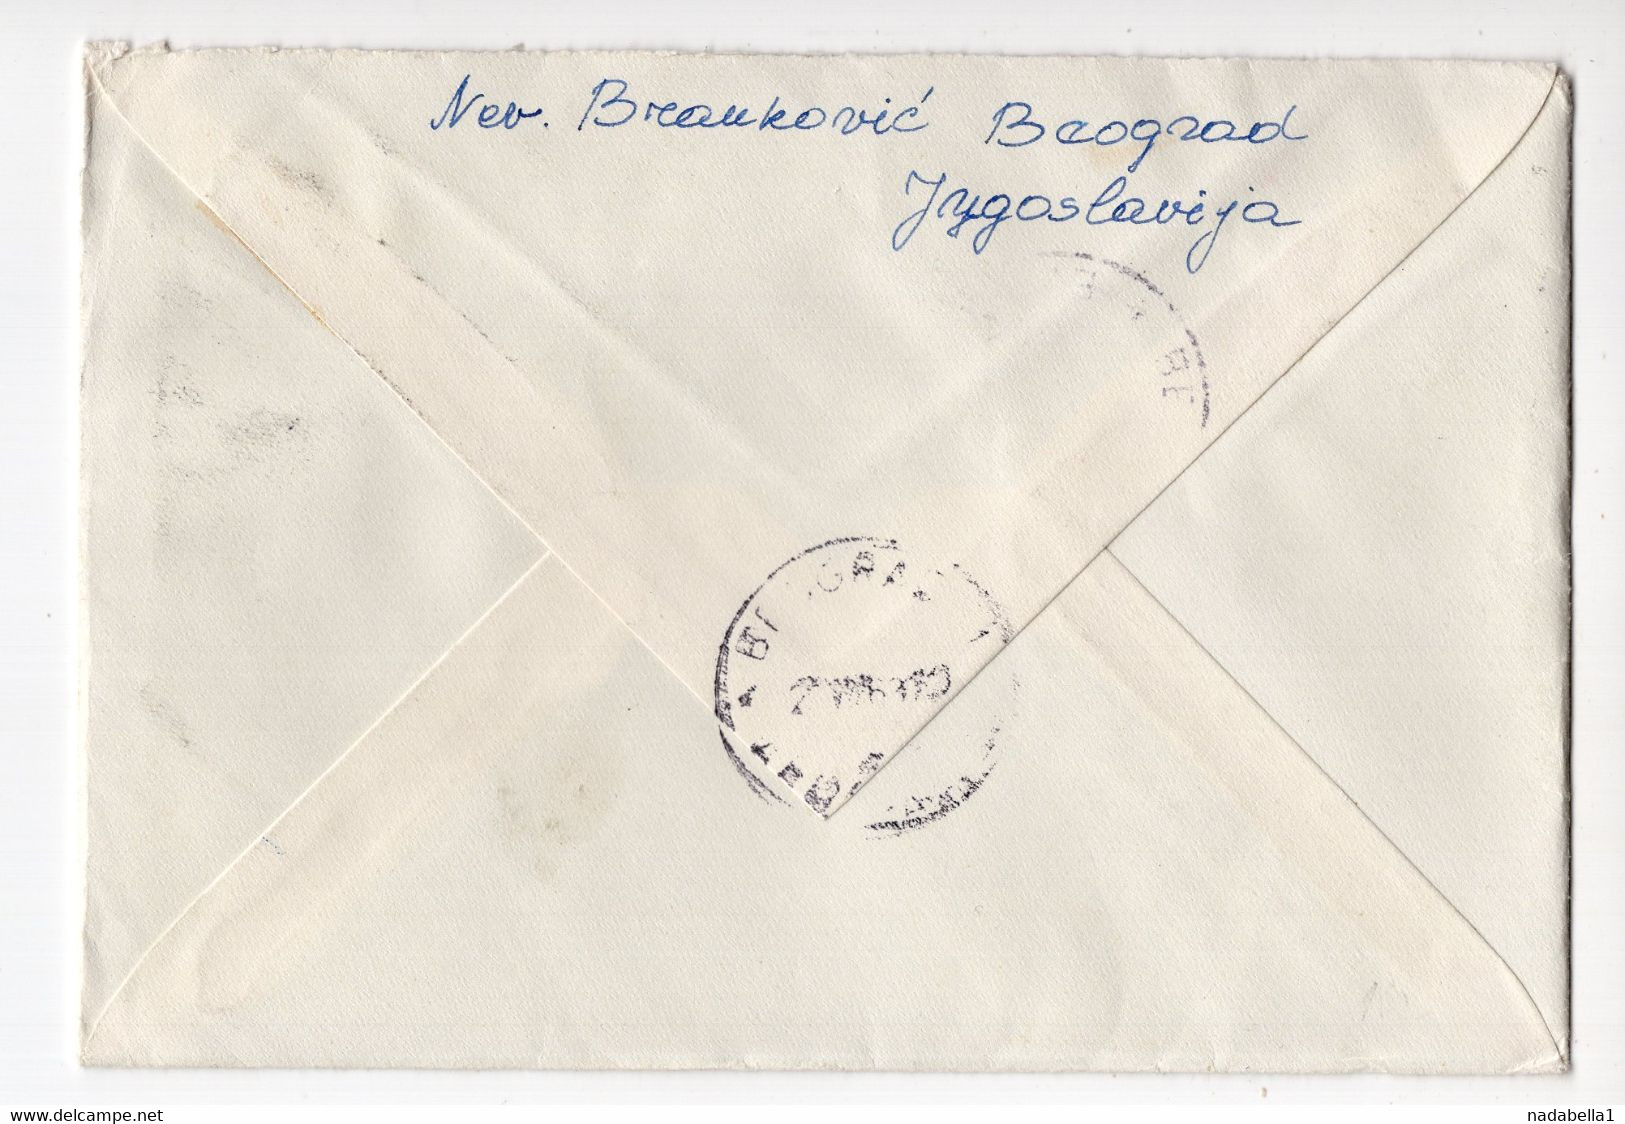 1965. YUGOSLAVIA,SERBIA,BELGRADE,AIRMAIL,REGISTERED COVER TO SWITZERLAND - Poste Aérienne